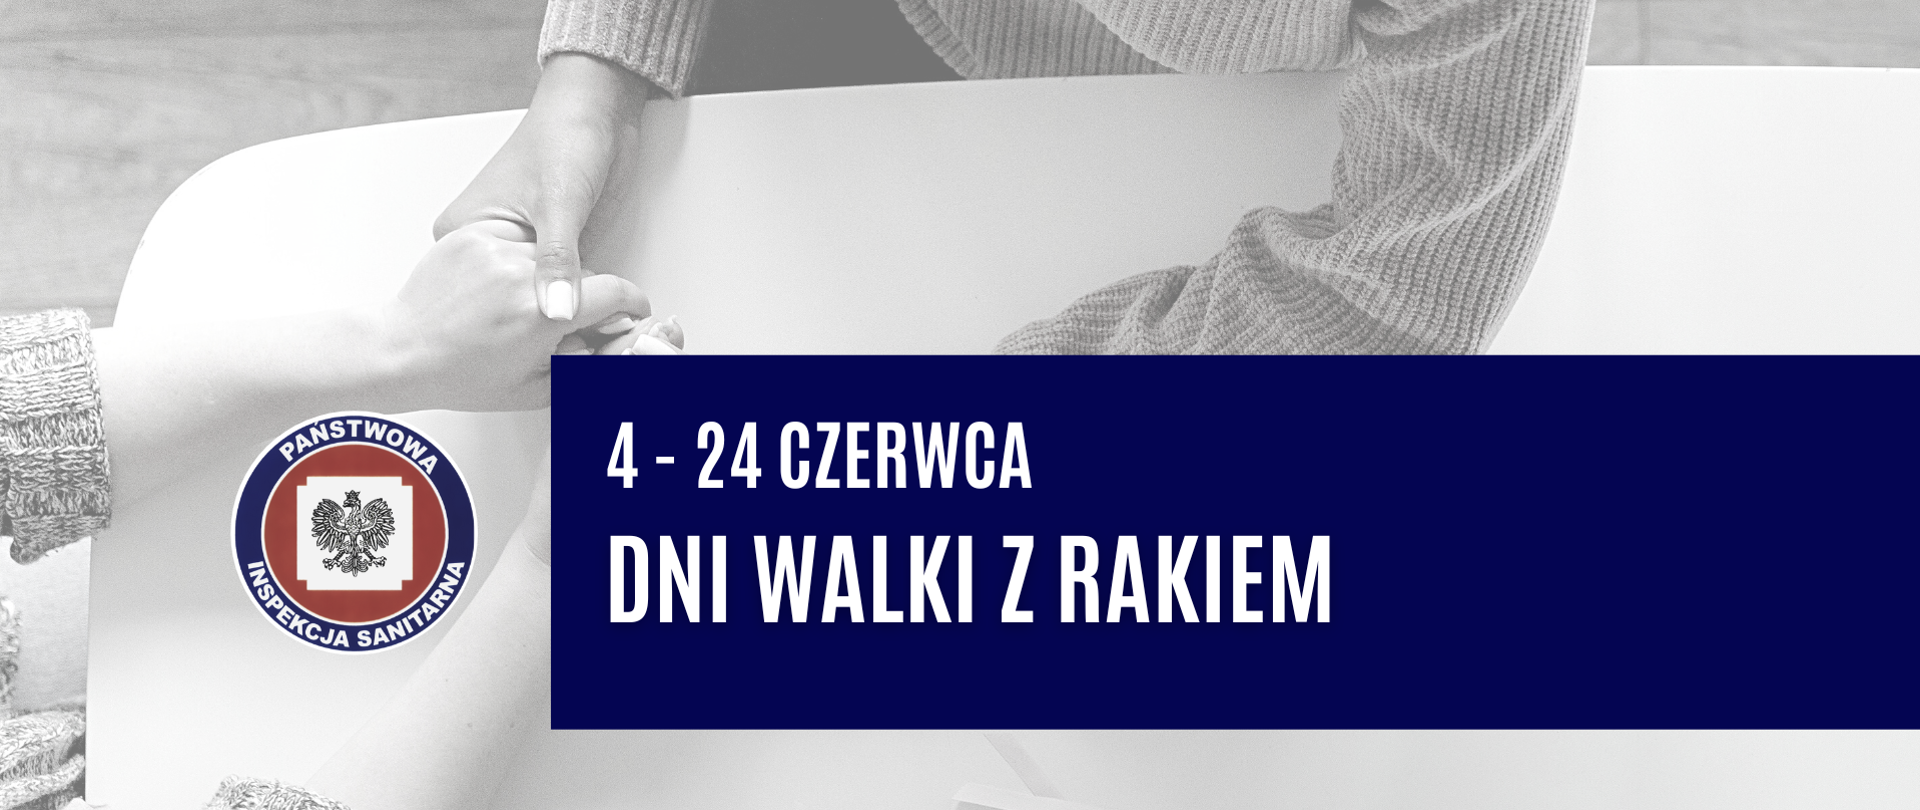 Dni_walki_z_rakiem